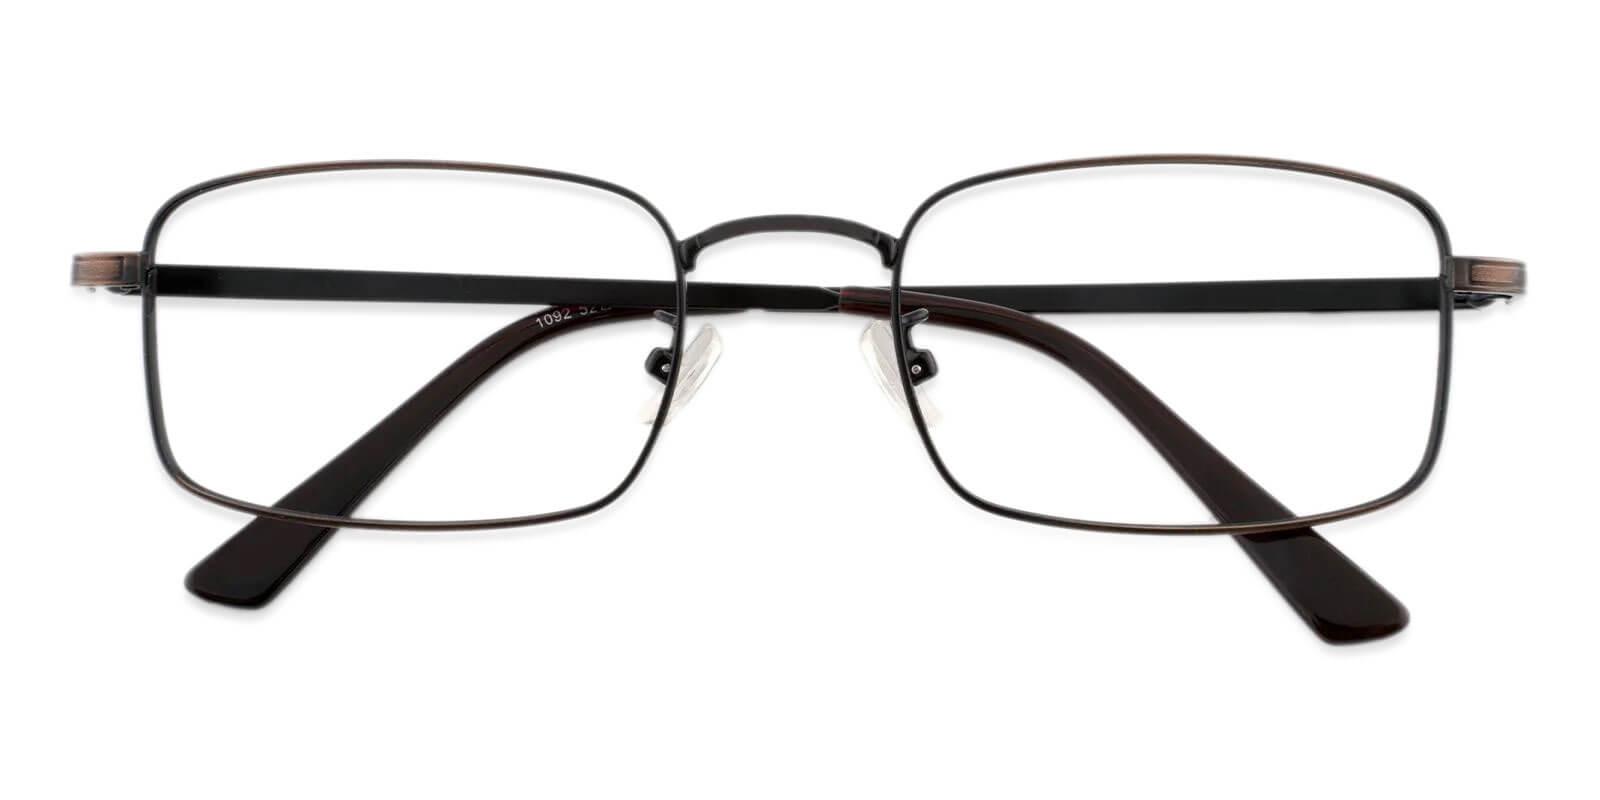 Owen Brown Metal Eyeglasses , NosePads Frames from ABBE Glasses